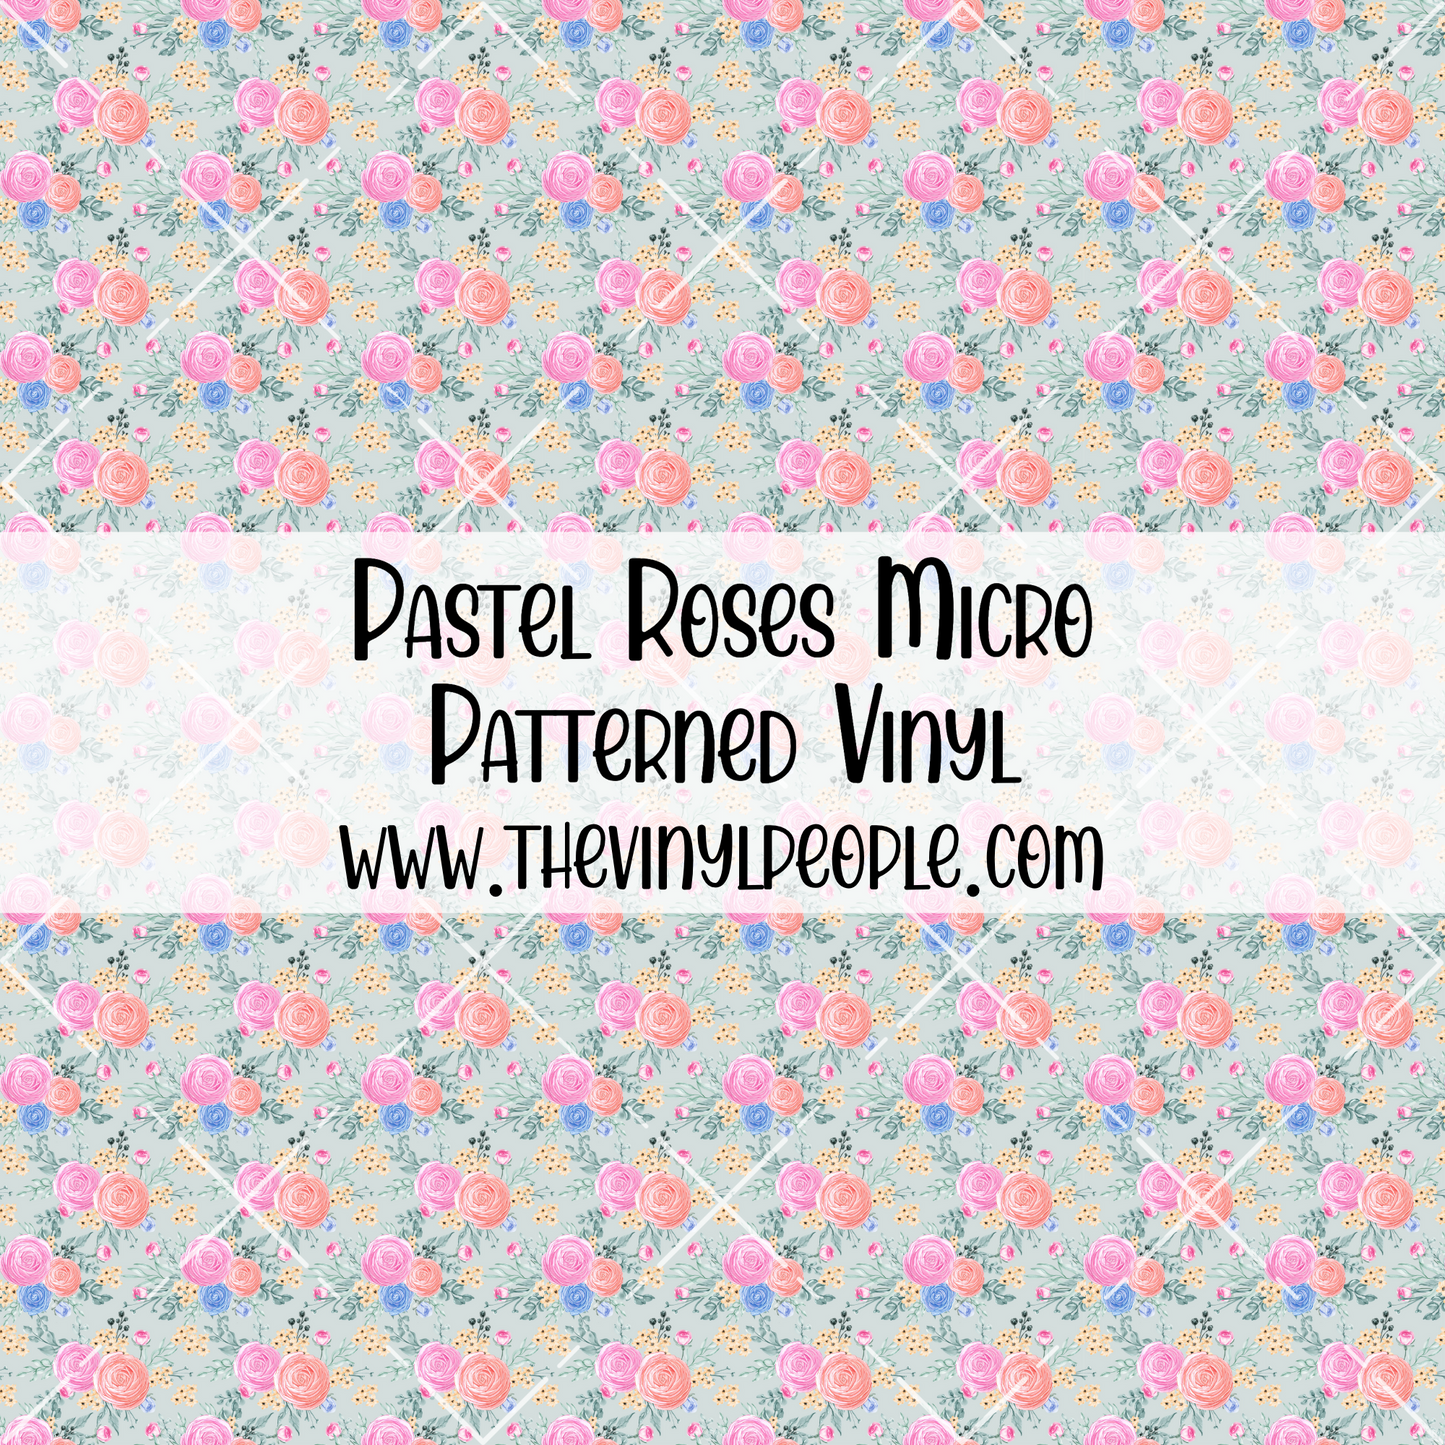 Pastel Roses Patterned Vinyl